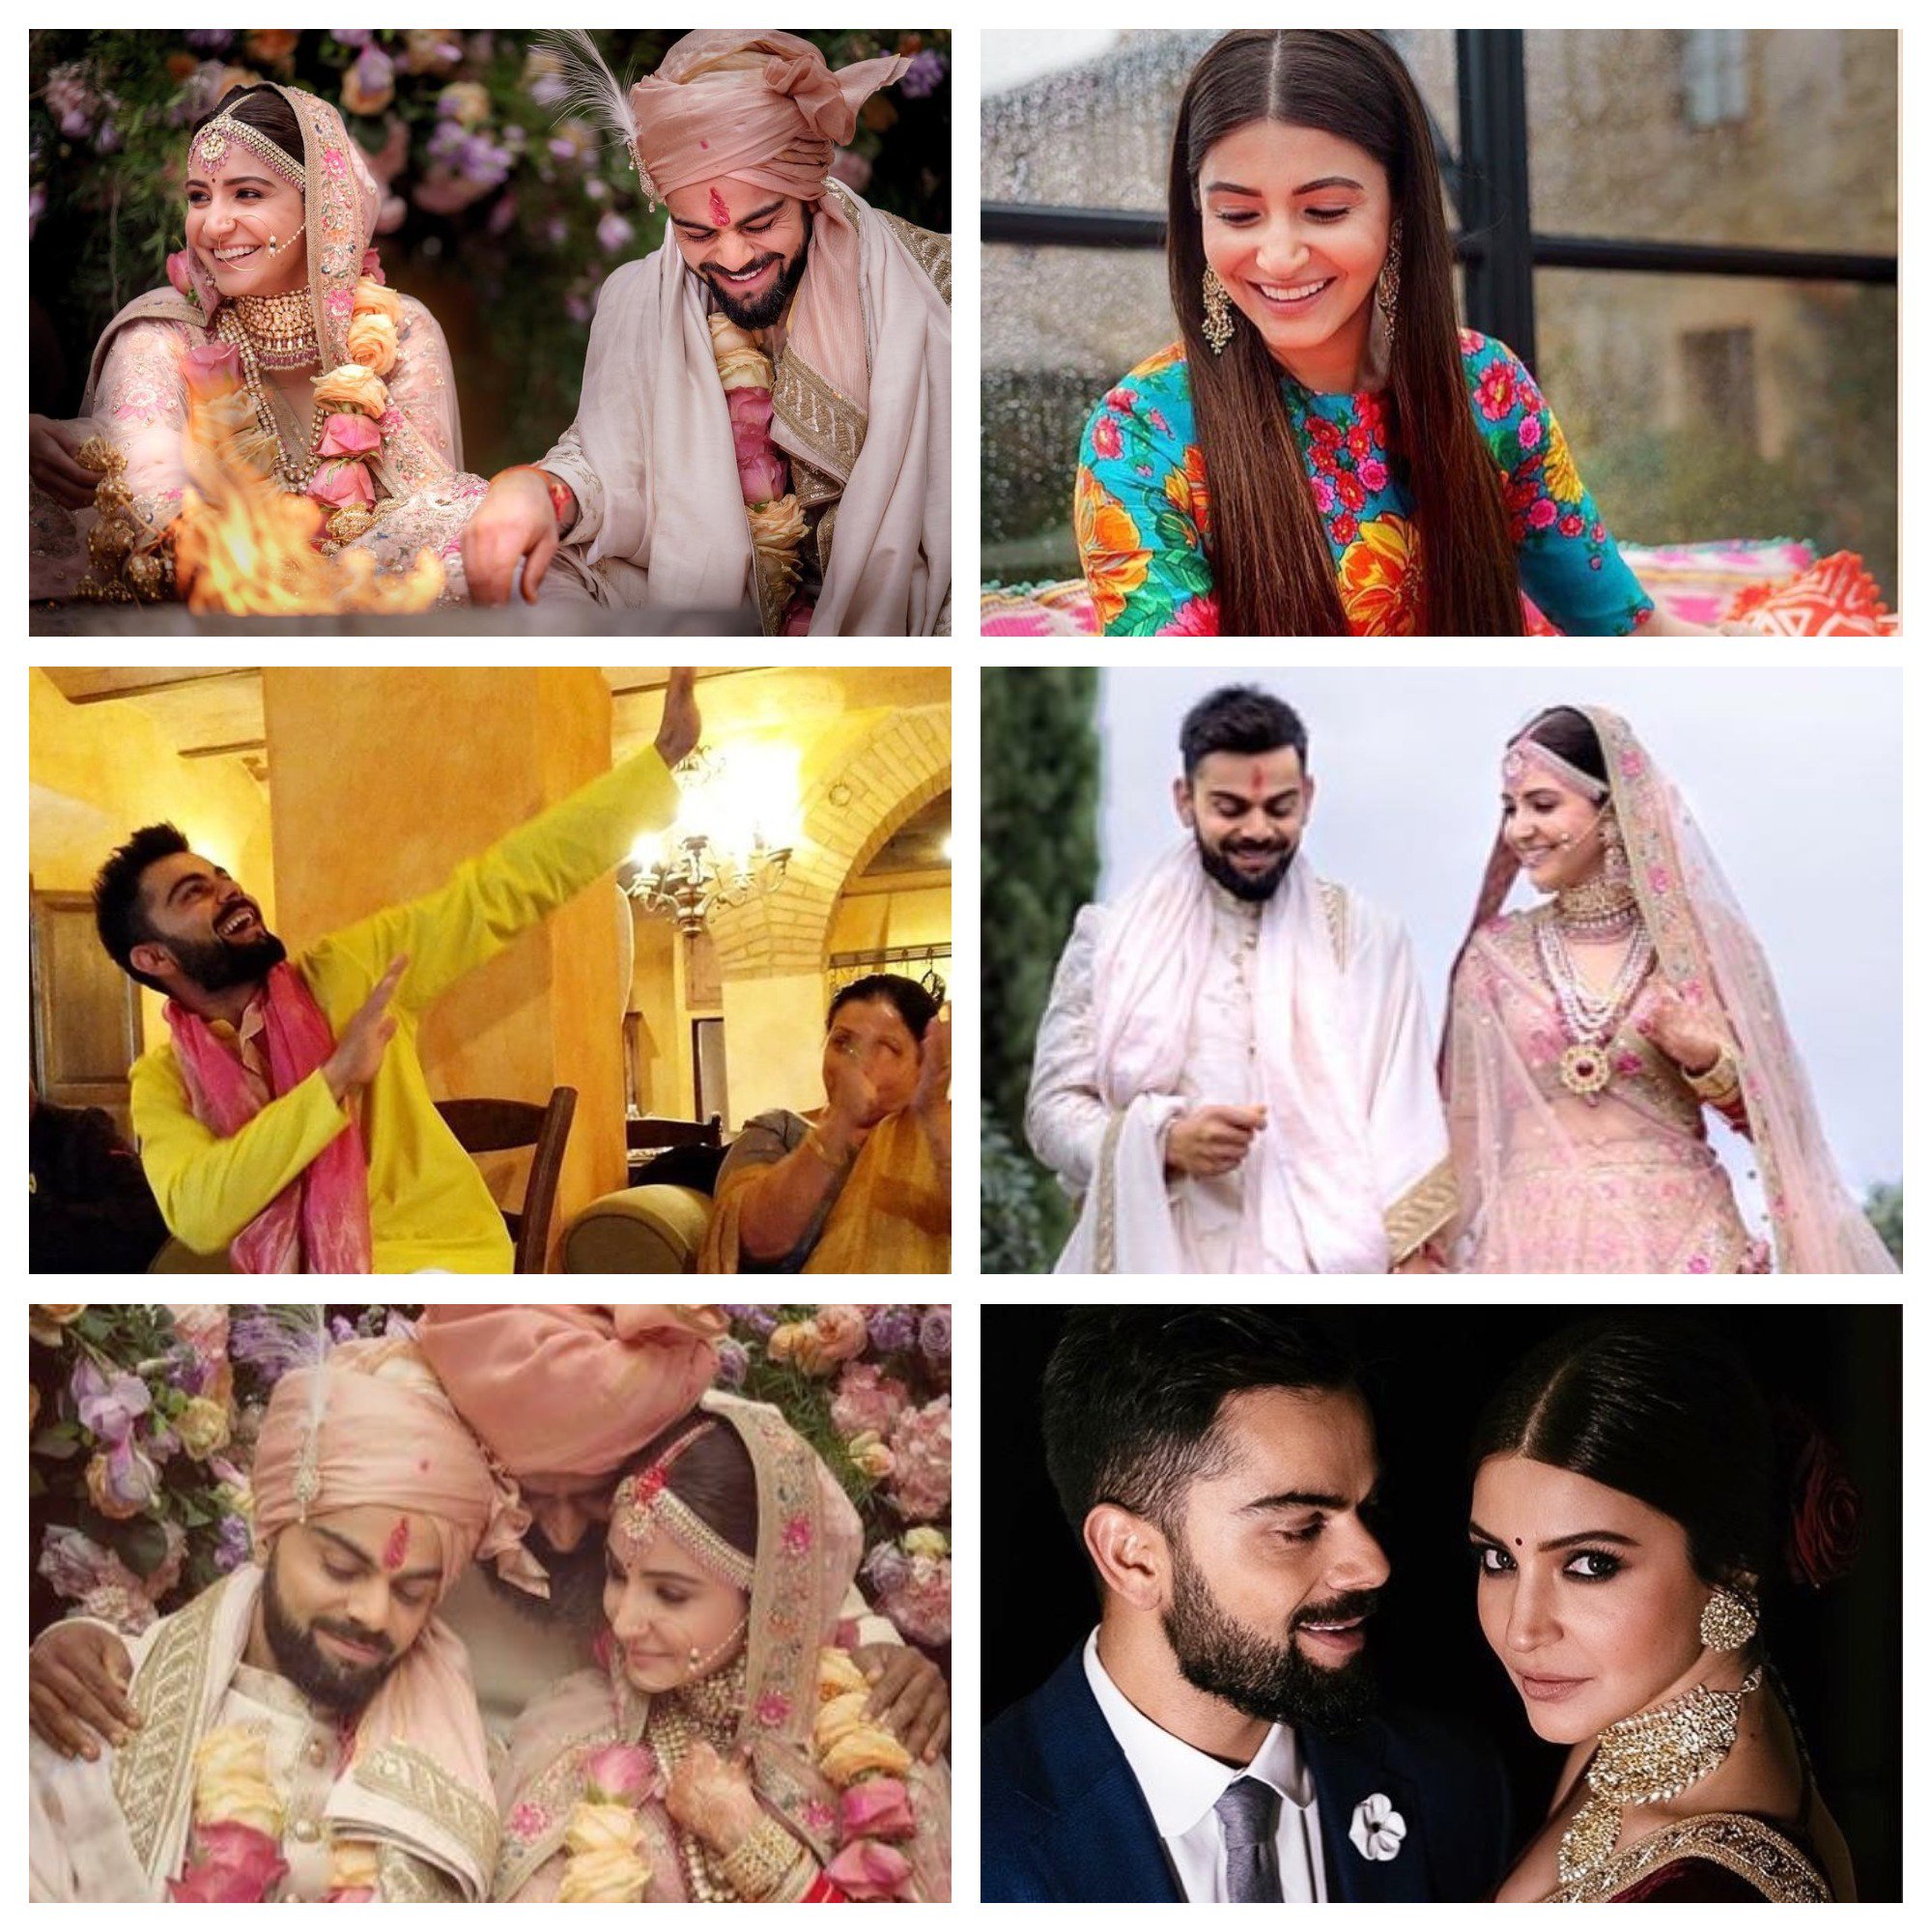 Dapper Virat Kohli and Stunning Anushka Sharma.. 😚 | Indian wedding gowns,  Anushka sharma, Indian fashion